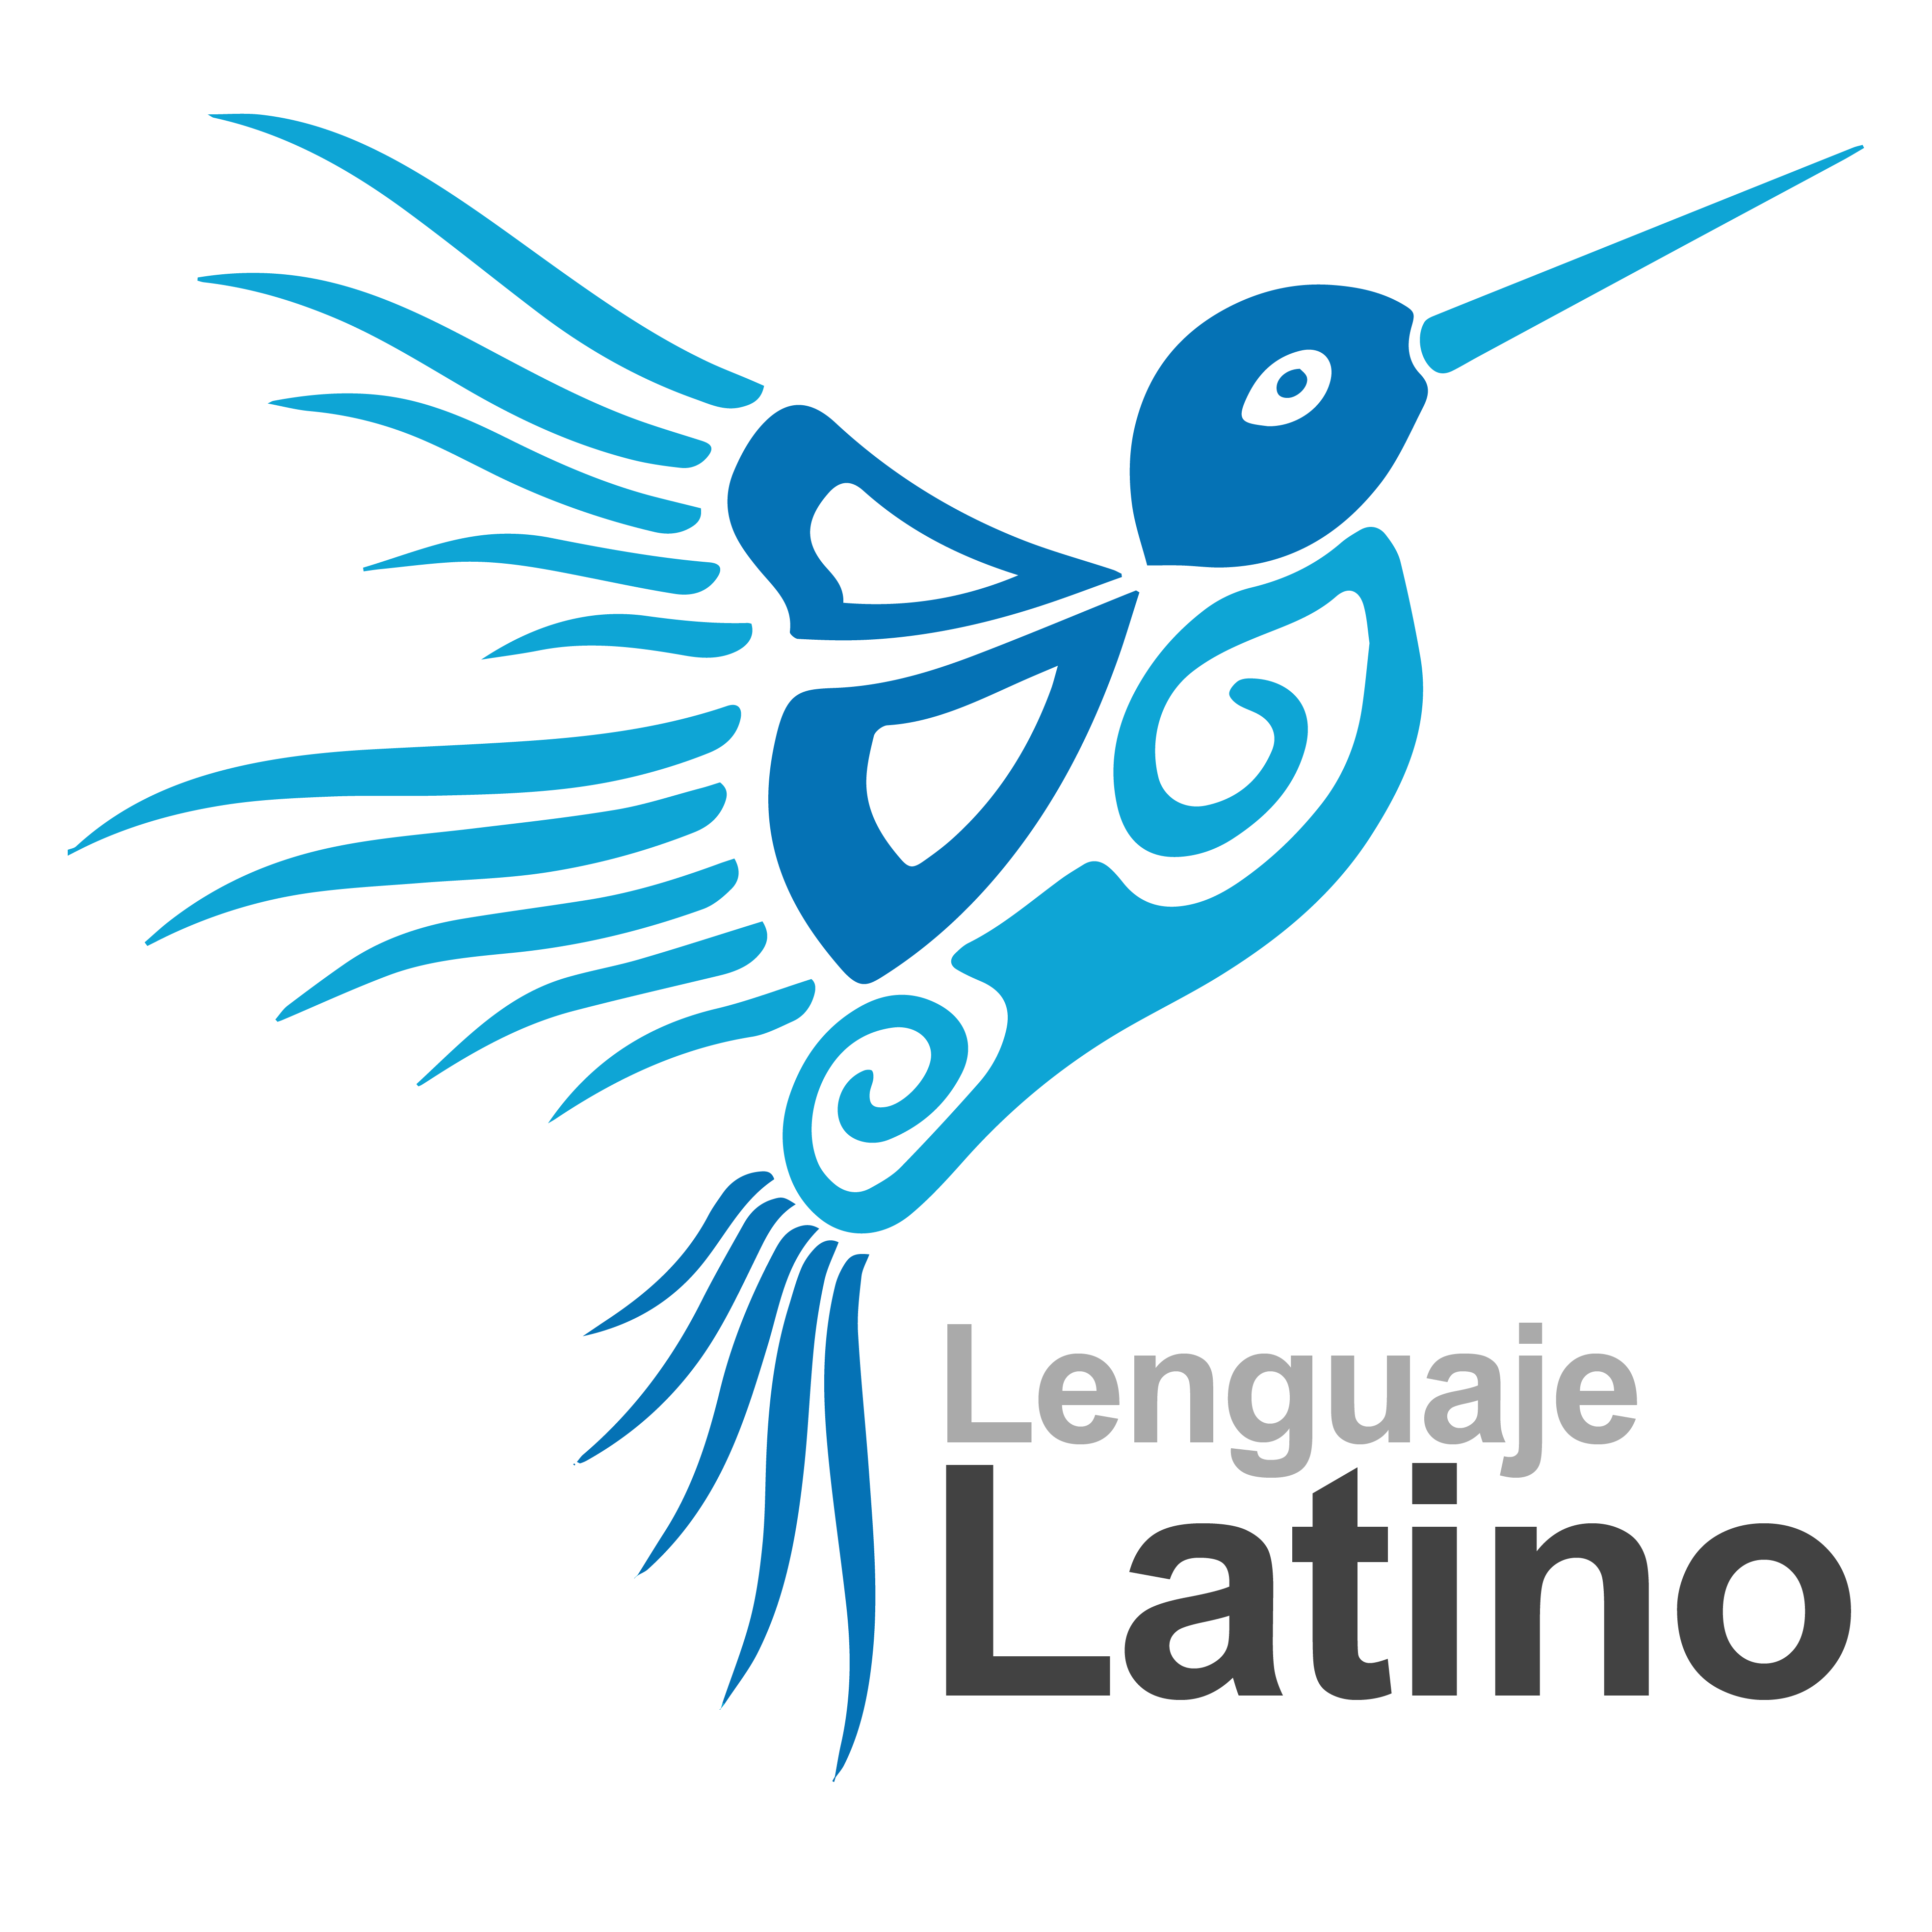 Latino (lenguaje de programación) - Wikipedia, la enciclopedia libre